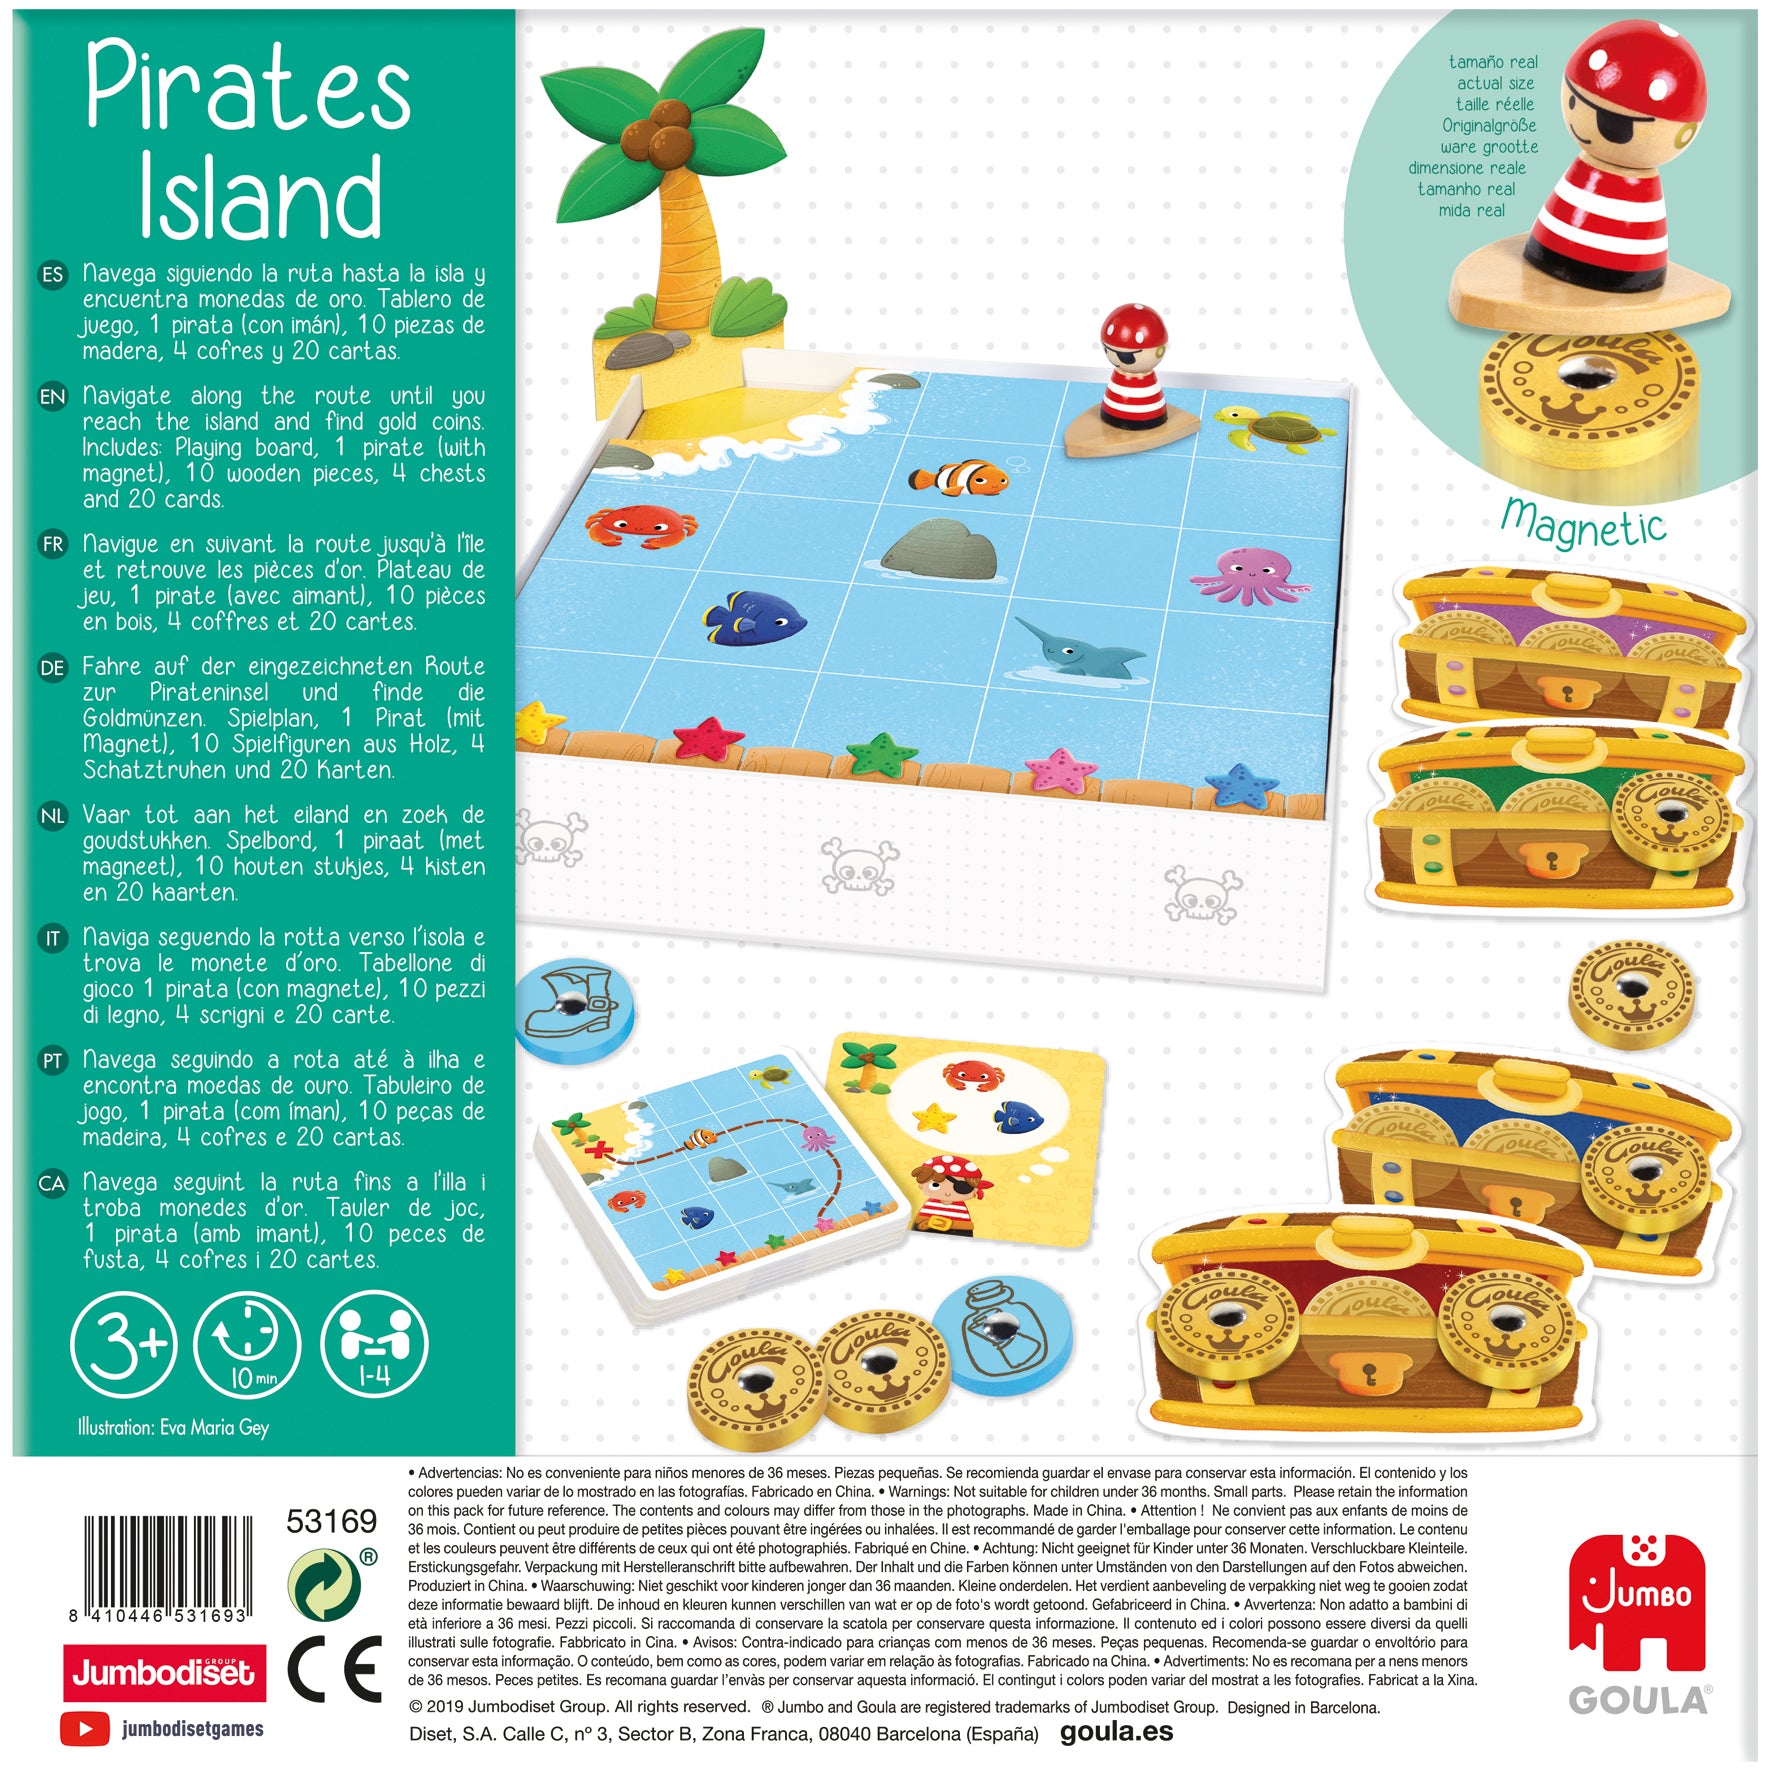 Pirates Island - product image - Jumboplay.com